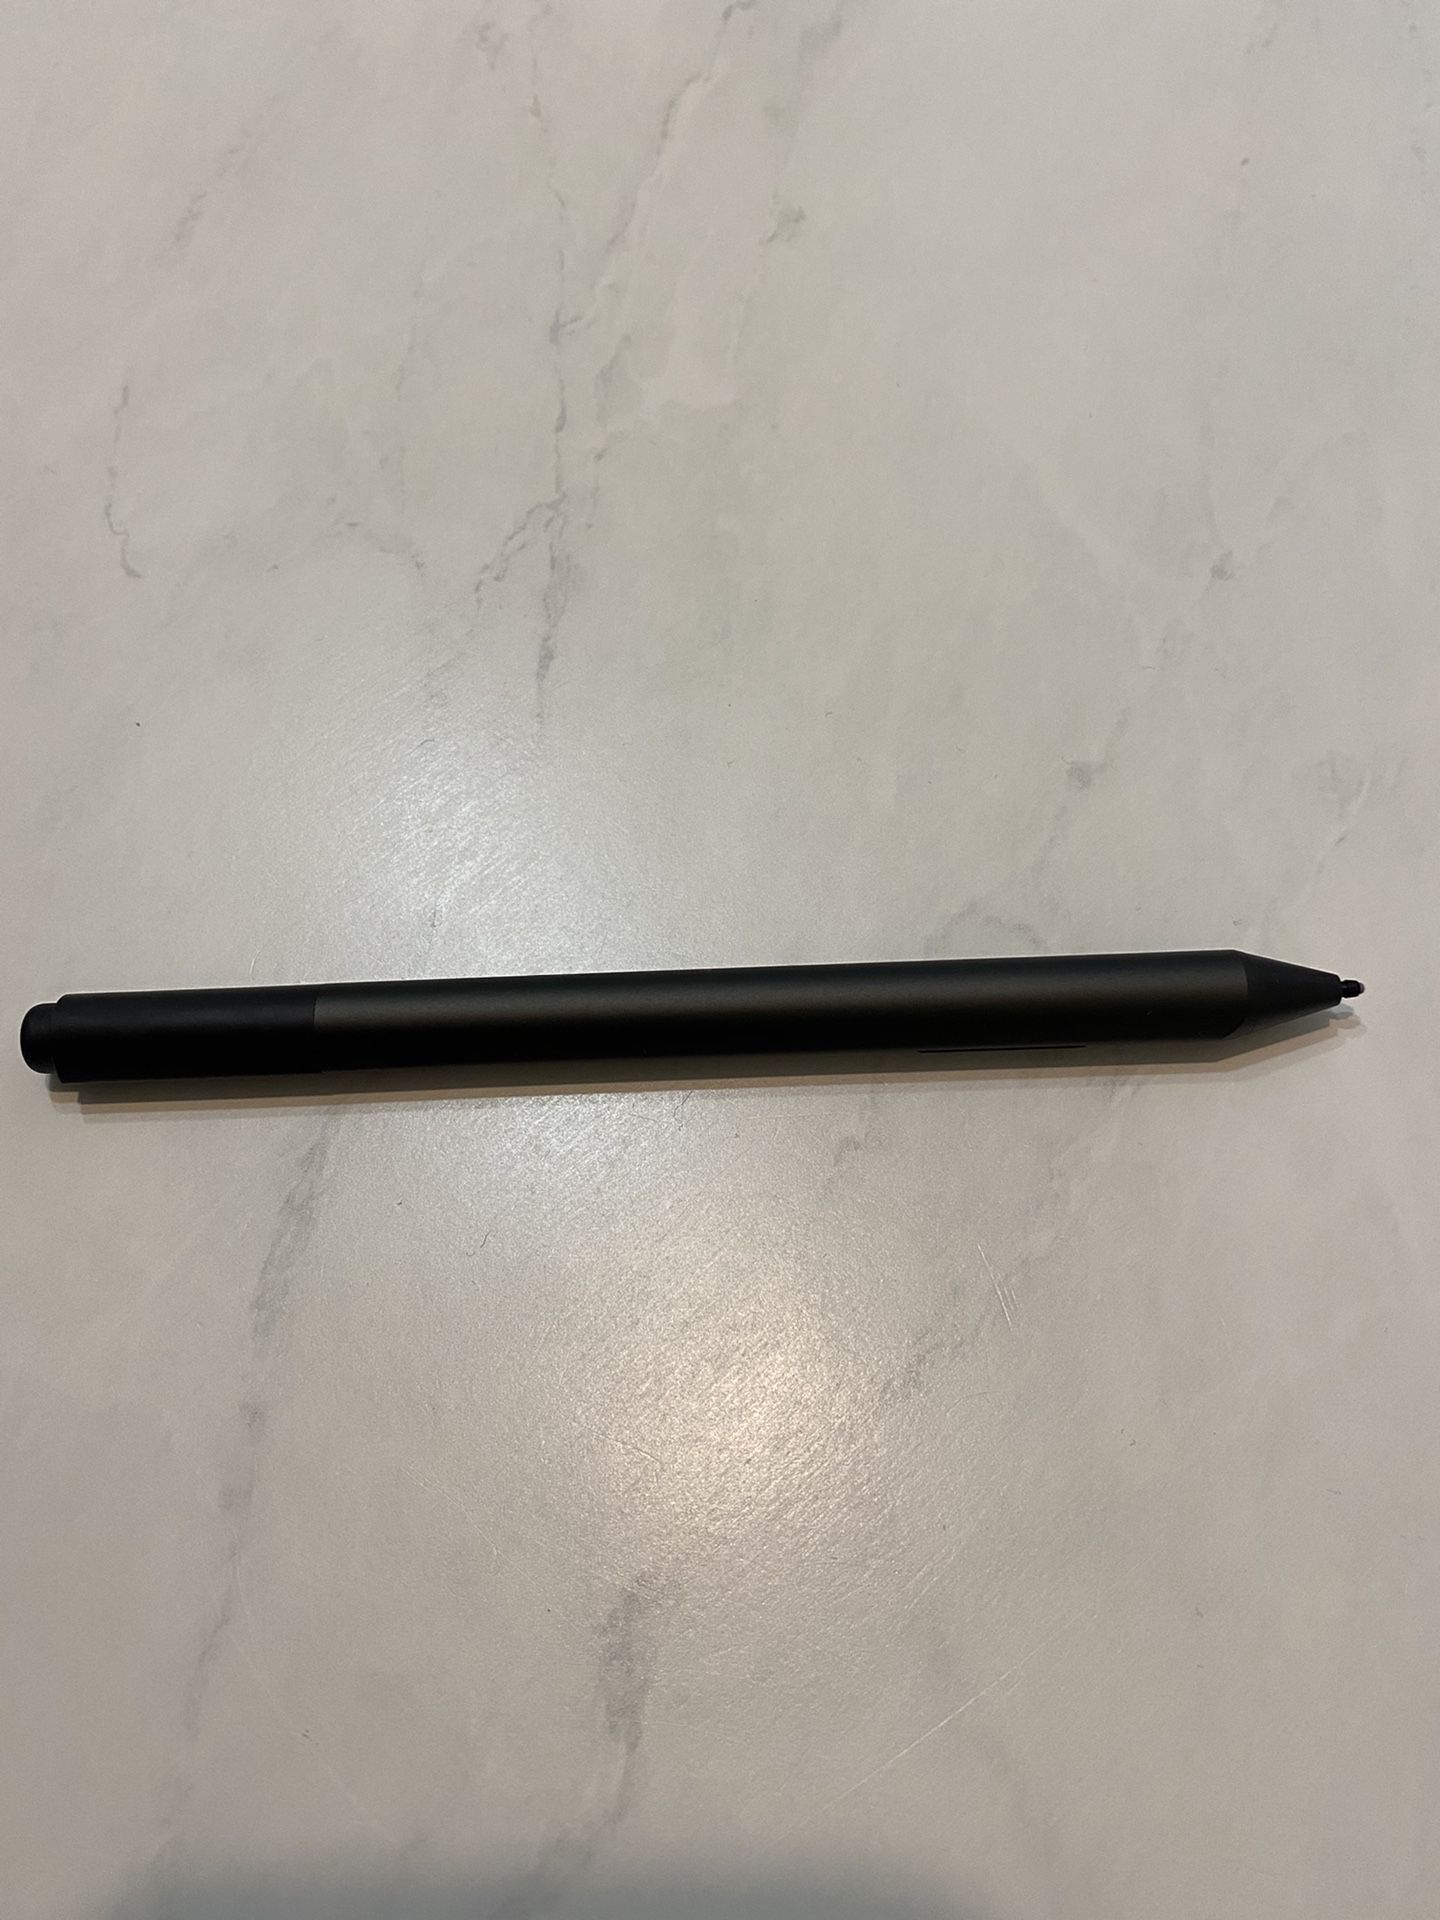 Microsoft Surface Pen in Black